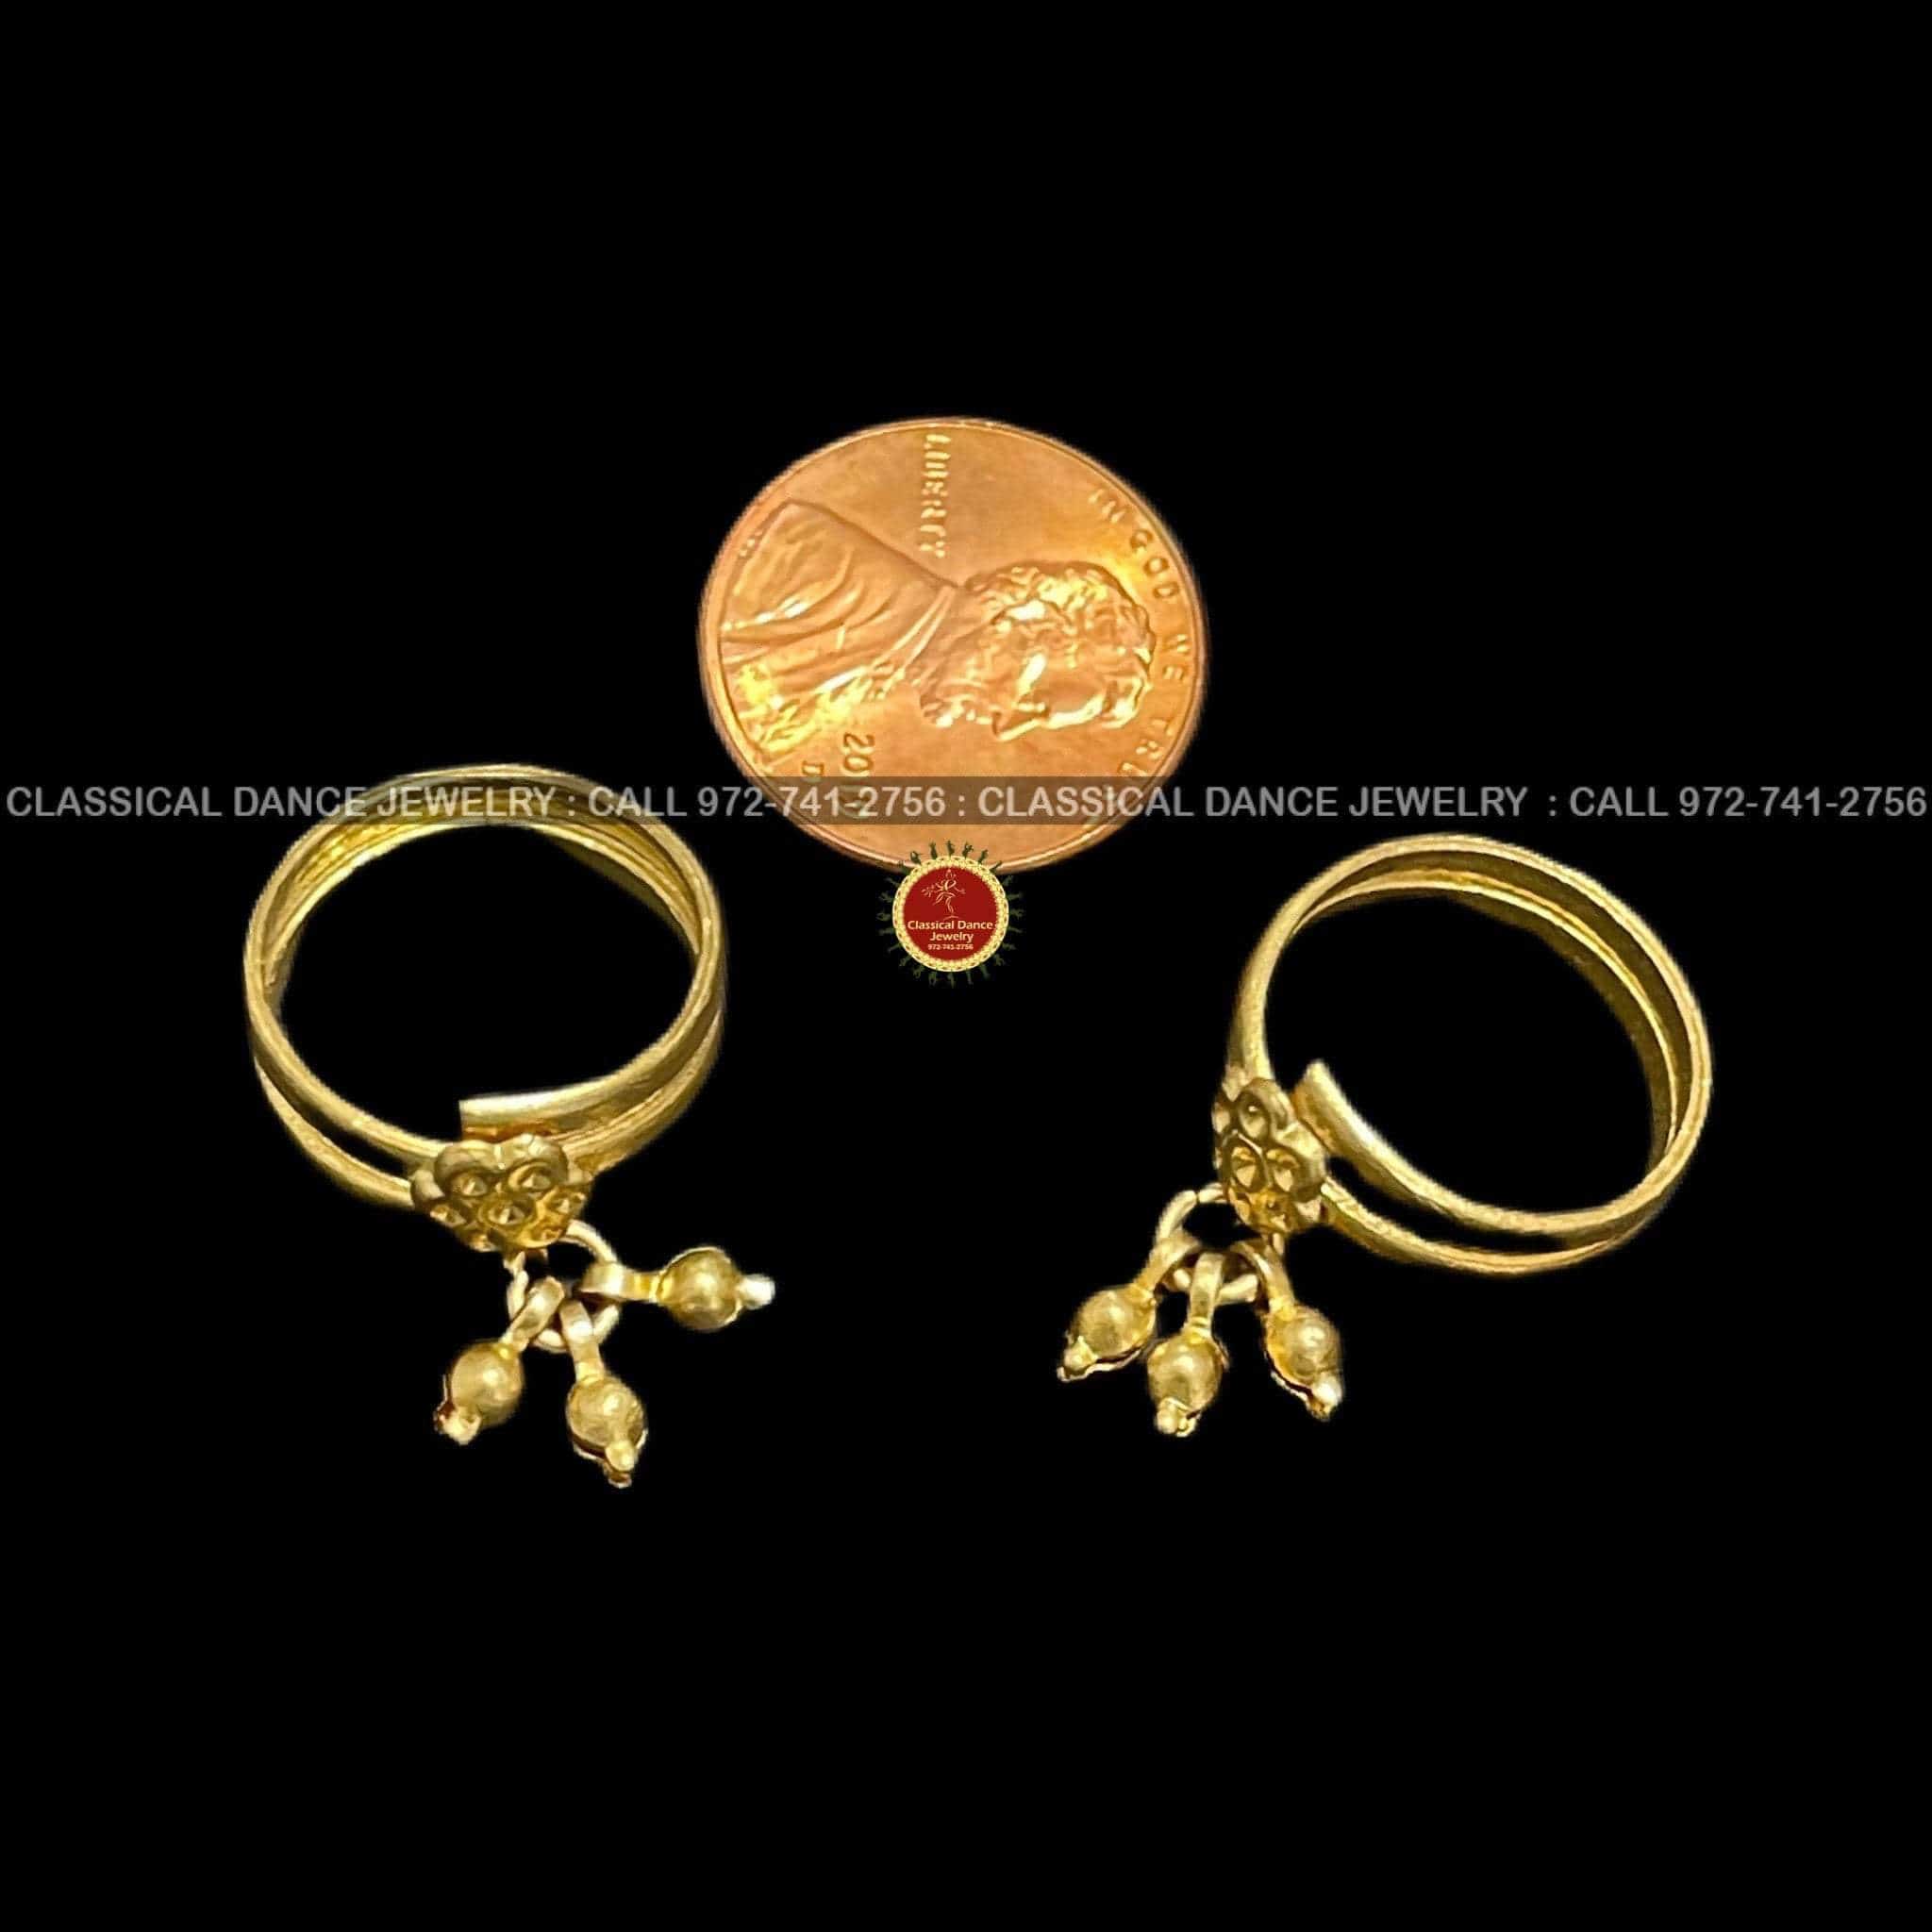 classical dance jewelry gold toe rings mattelu bichhiya indian jewelry traditional panchaloha weddings bharatnatyam kuchipudi classical dance jewelry 29553534304421